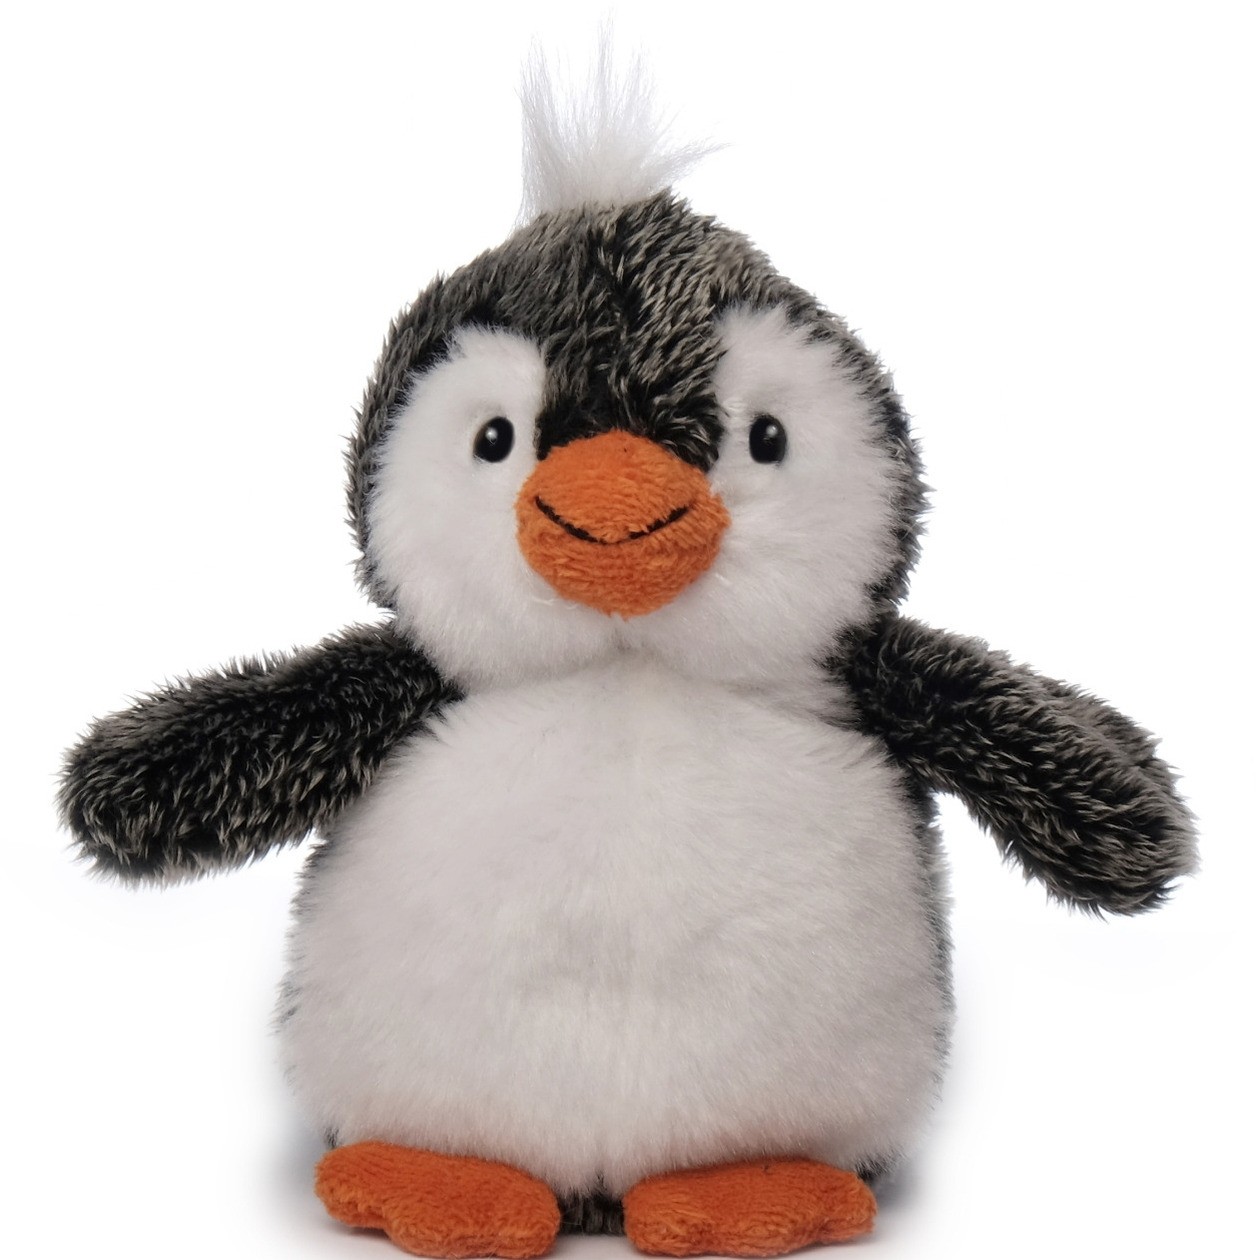 Inware pluche pinguin knuffeldier grijs-wit staand 13 cm